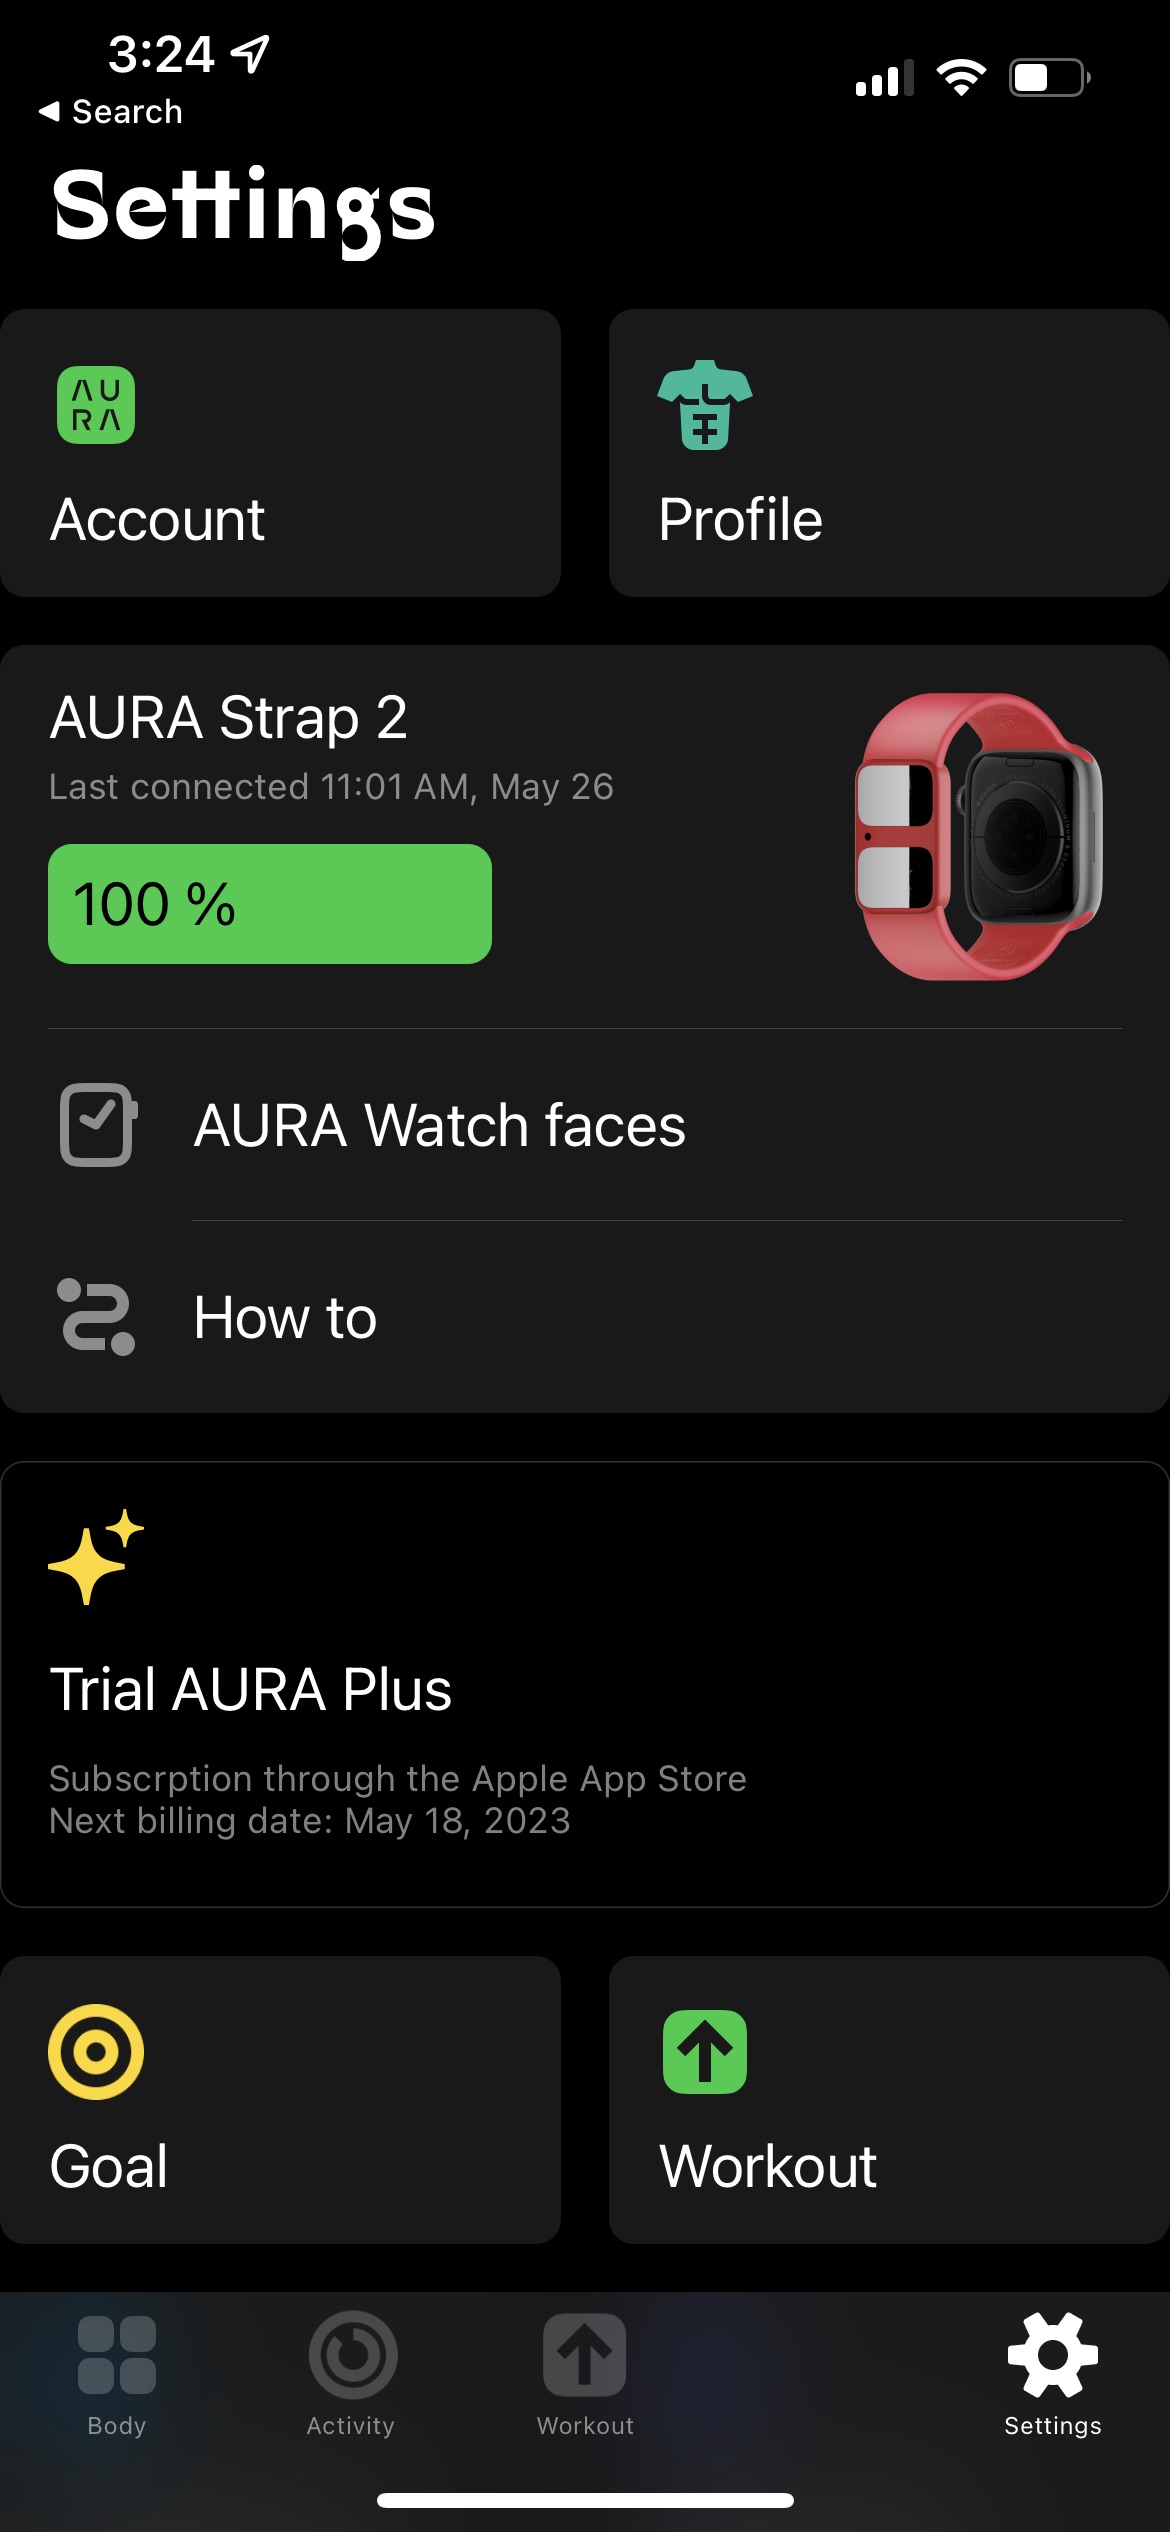 https://bgr.com/wp-content/uploads/2022/05/aura-app-3.jpeg?quality=82&strip=all